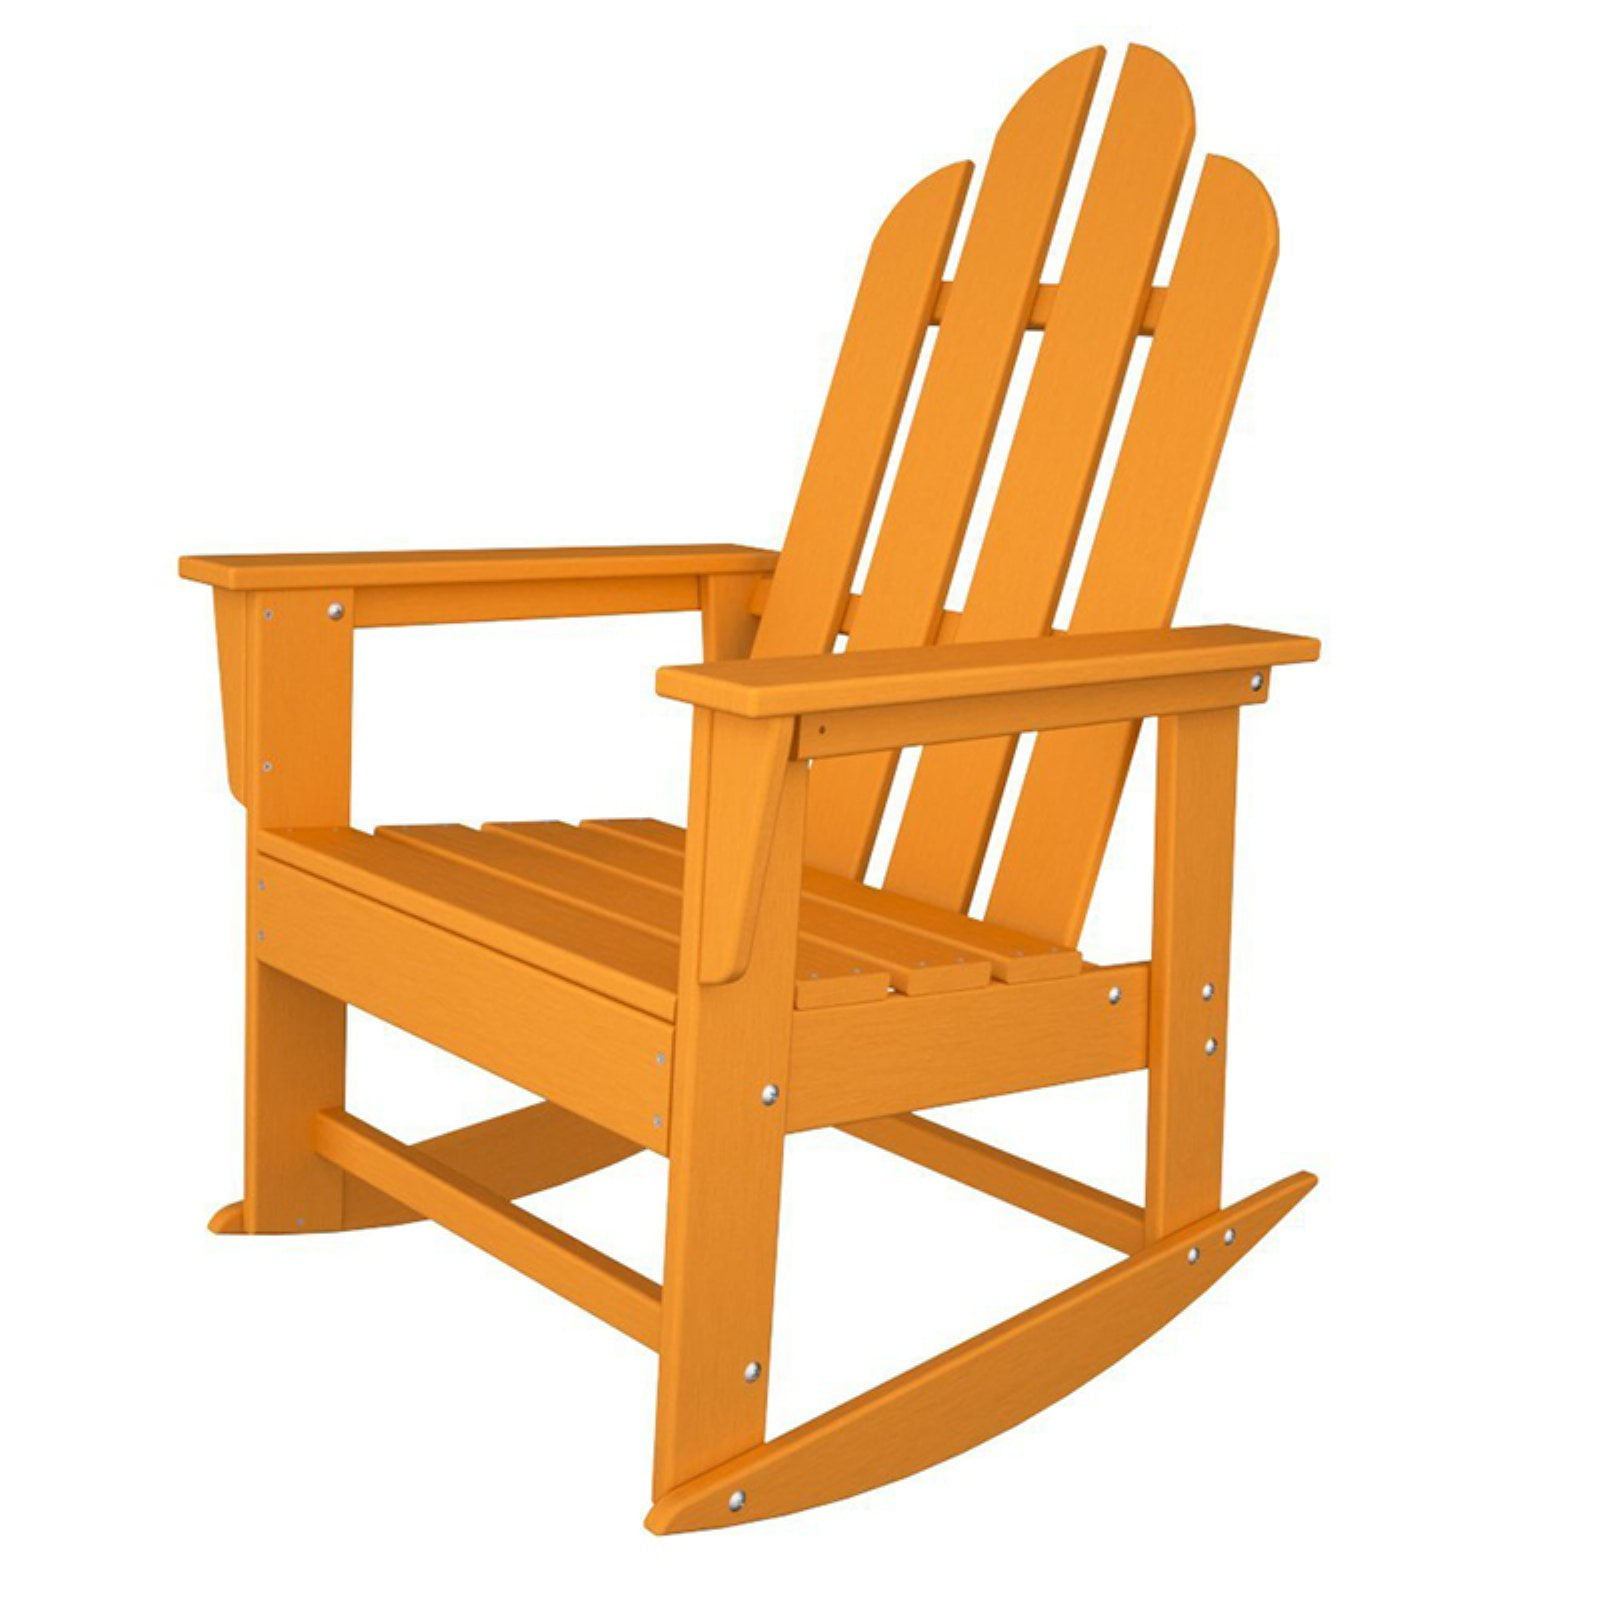 POLYWOOD® Long Island Recycled Plastic Adirondack Rocking Chair -
Walmart.com - Walmart.com